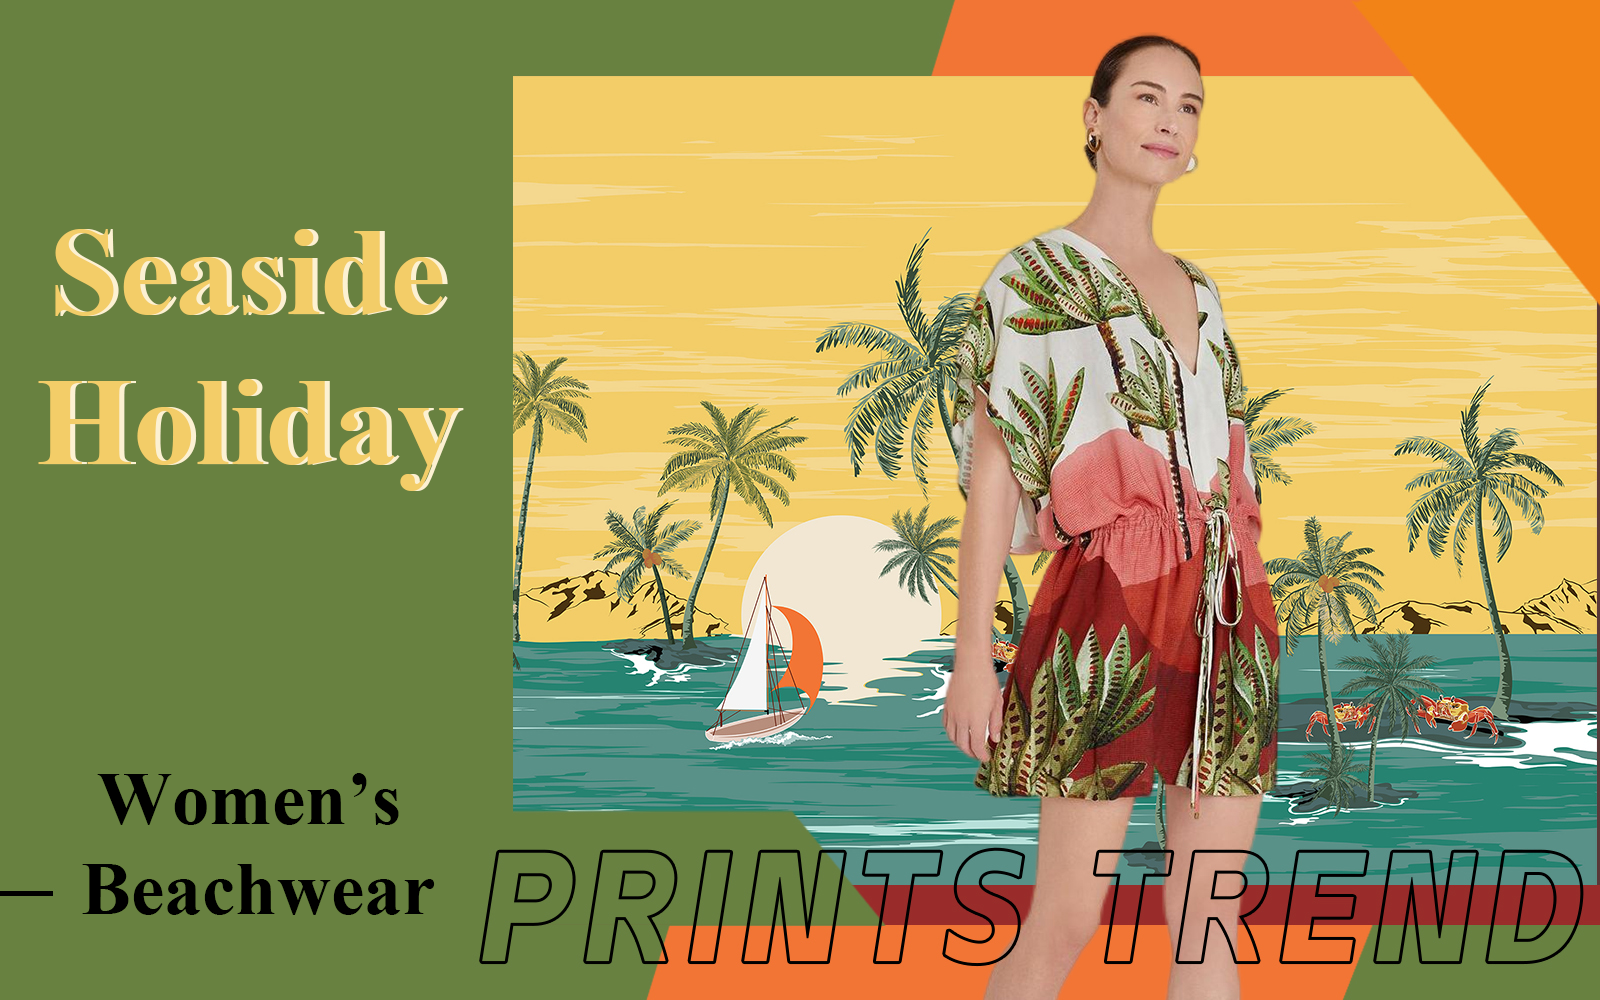 Seaside Holiday -- The Pattern Trend for Women's Beachwear